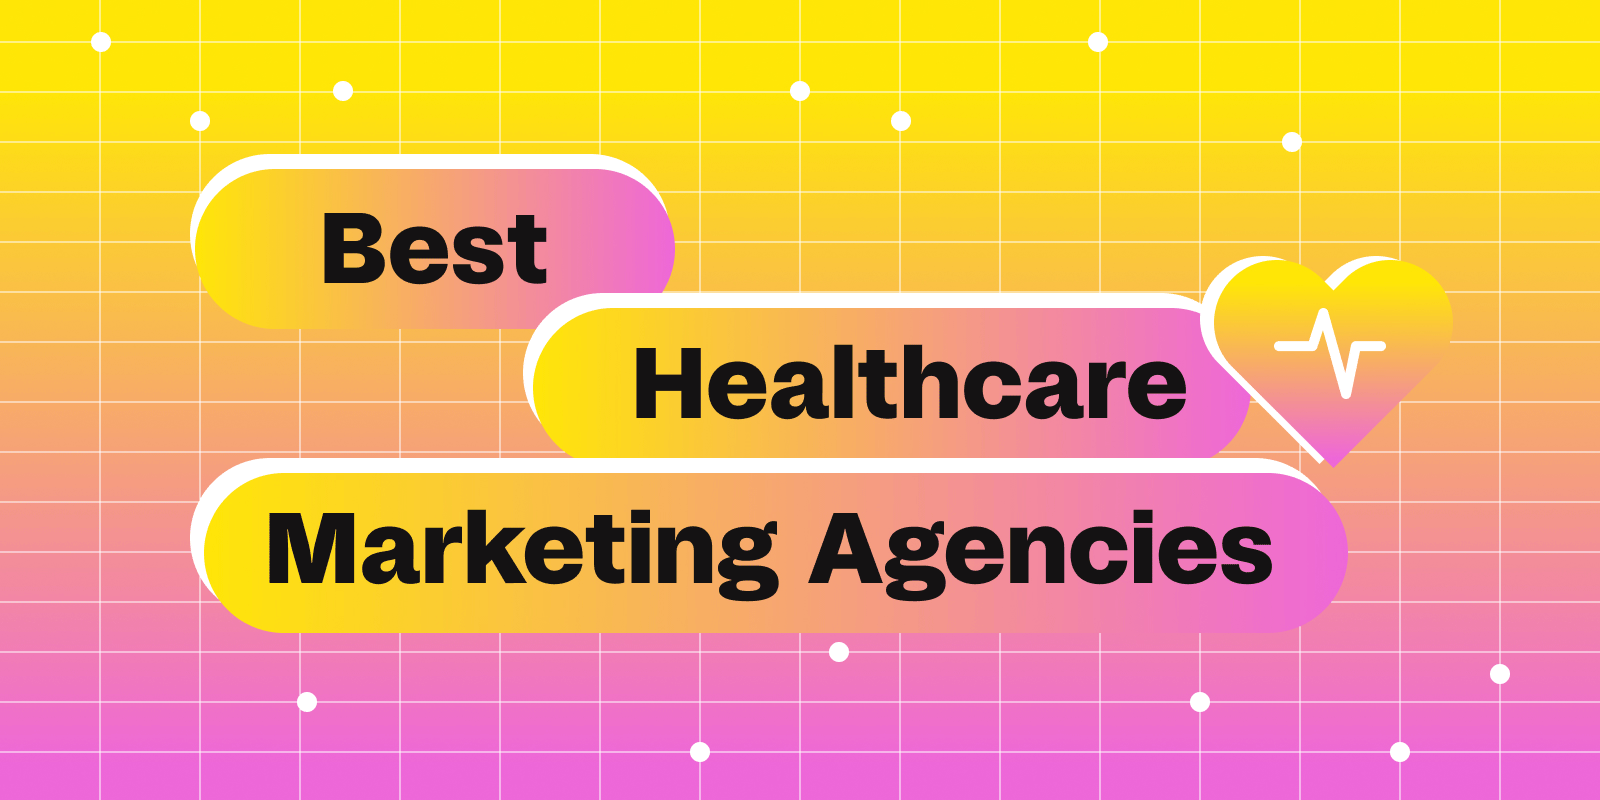 Best Healthcare Marketing Agencies